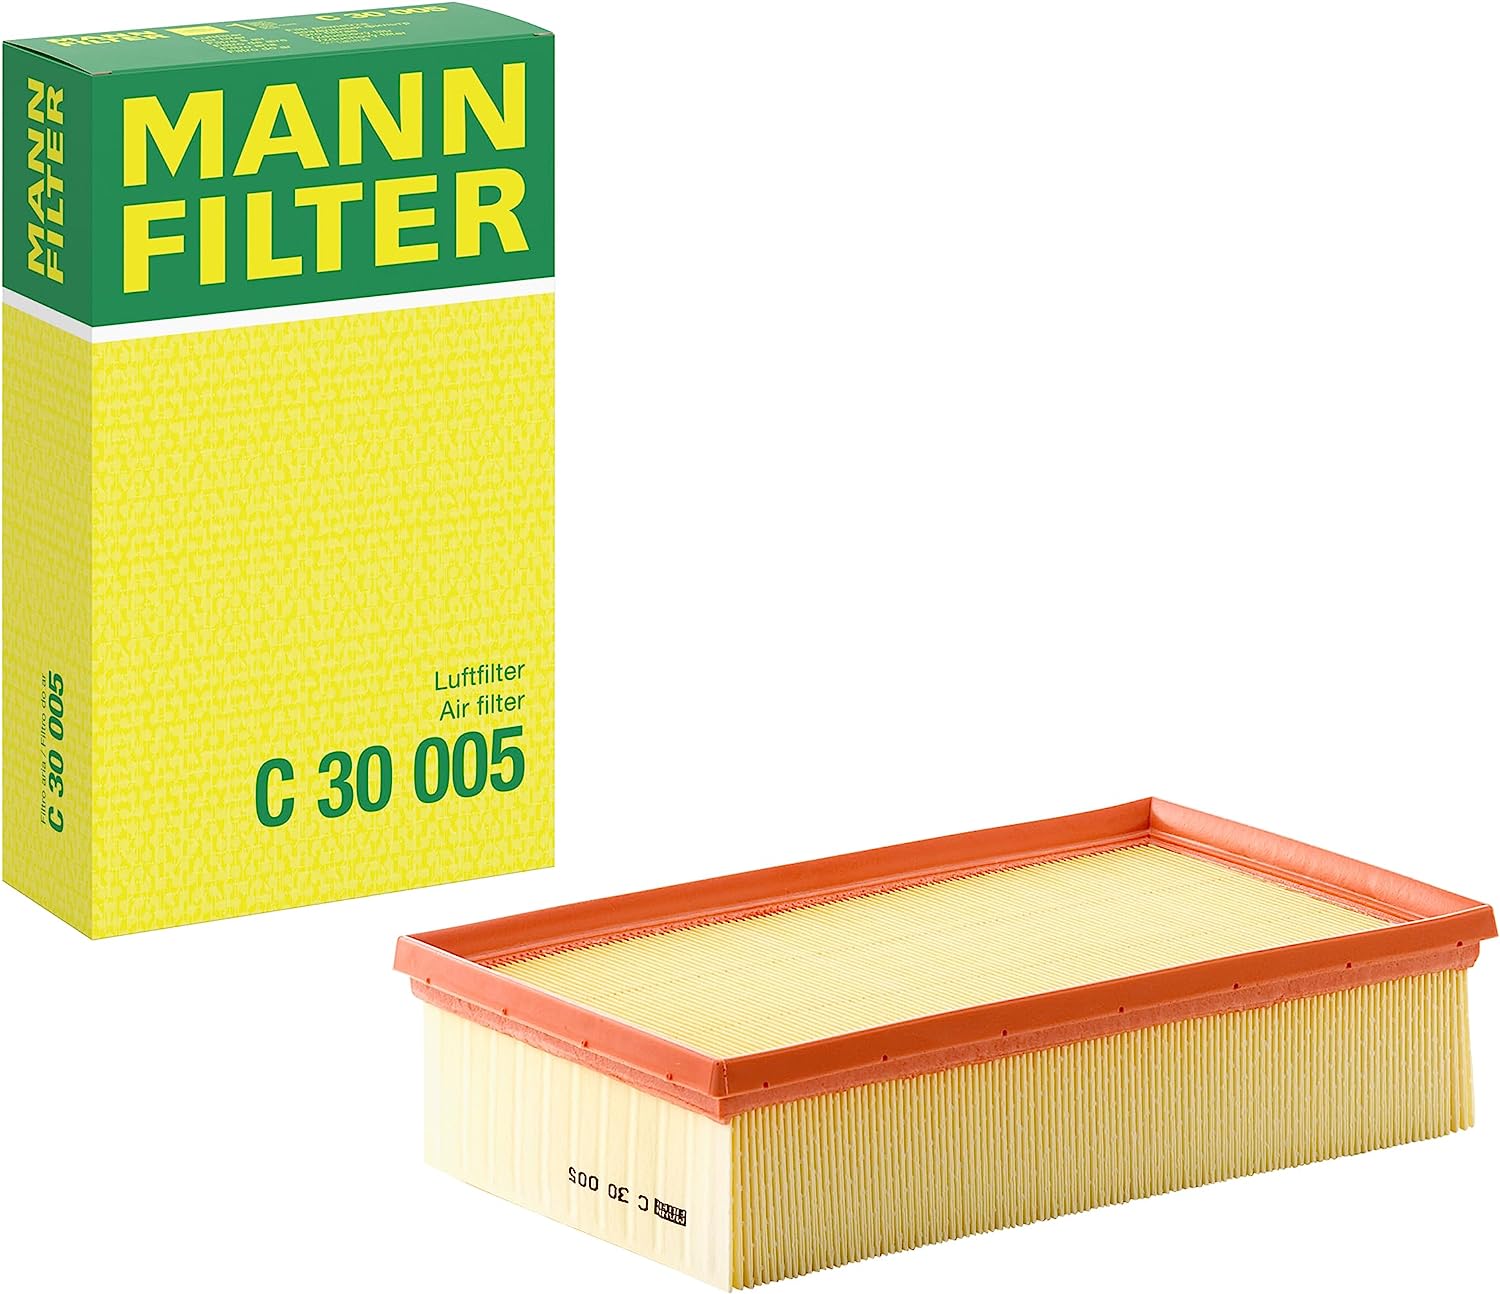 MANN FILTER Luftfilter C 30 005 – Saar-Pfalz Handel